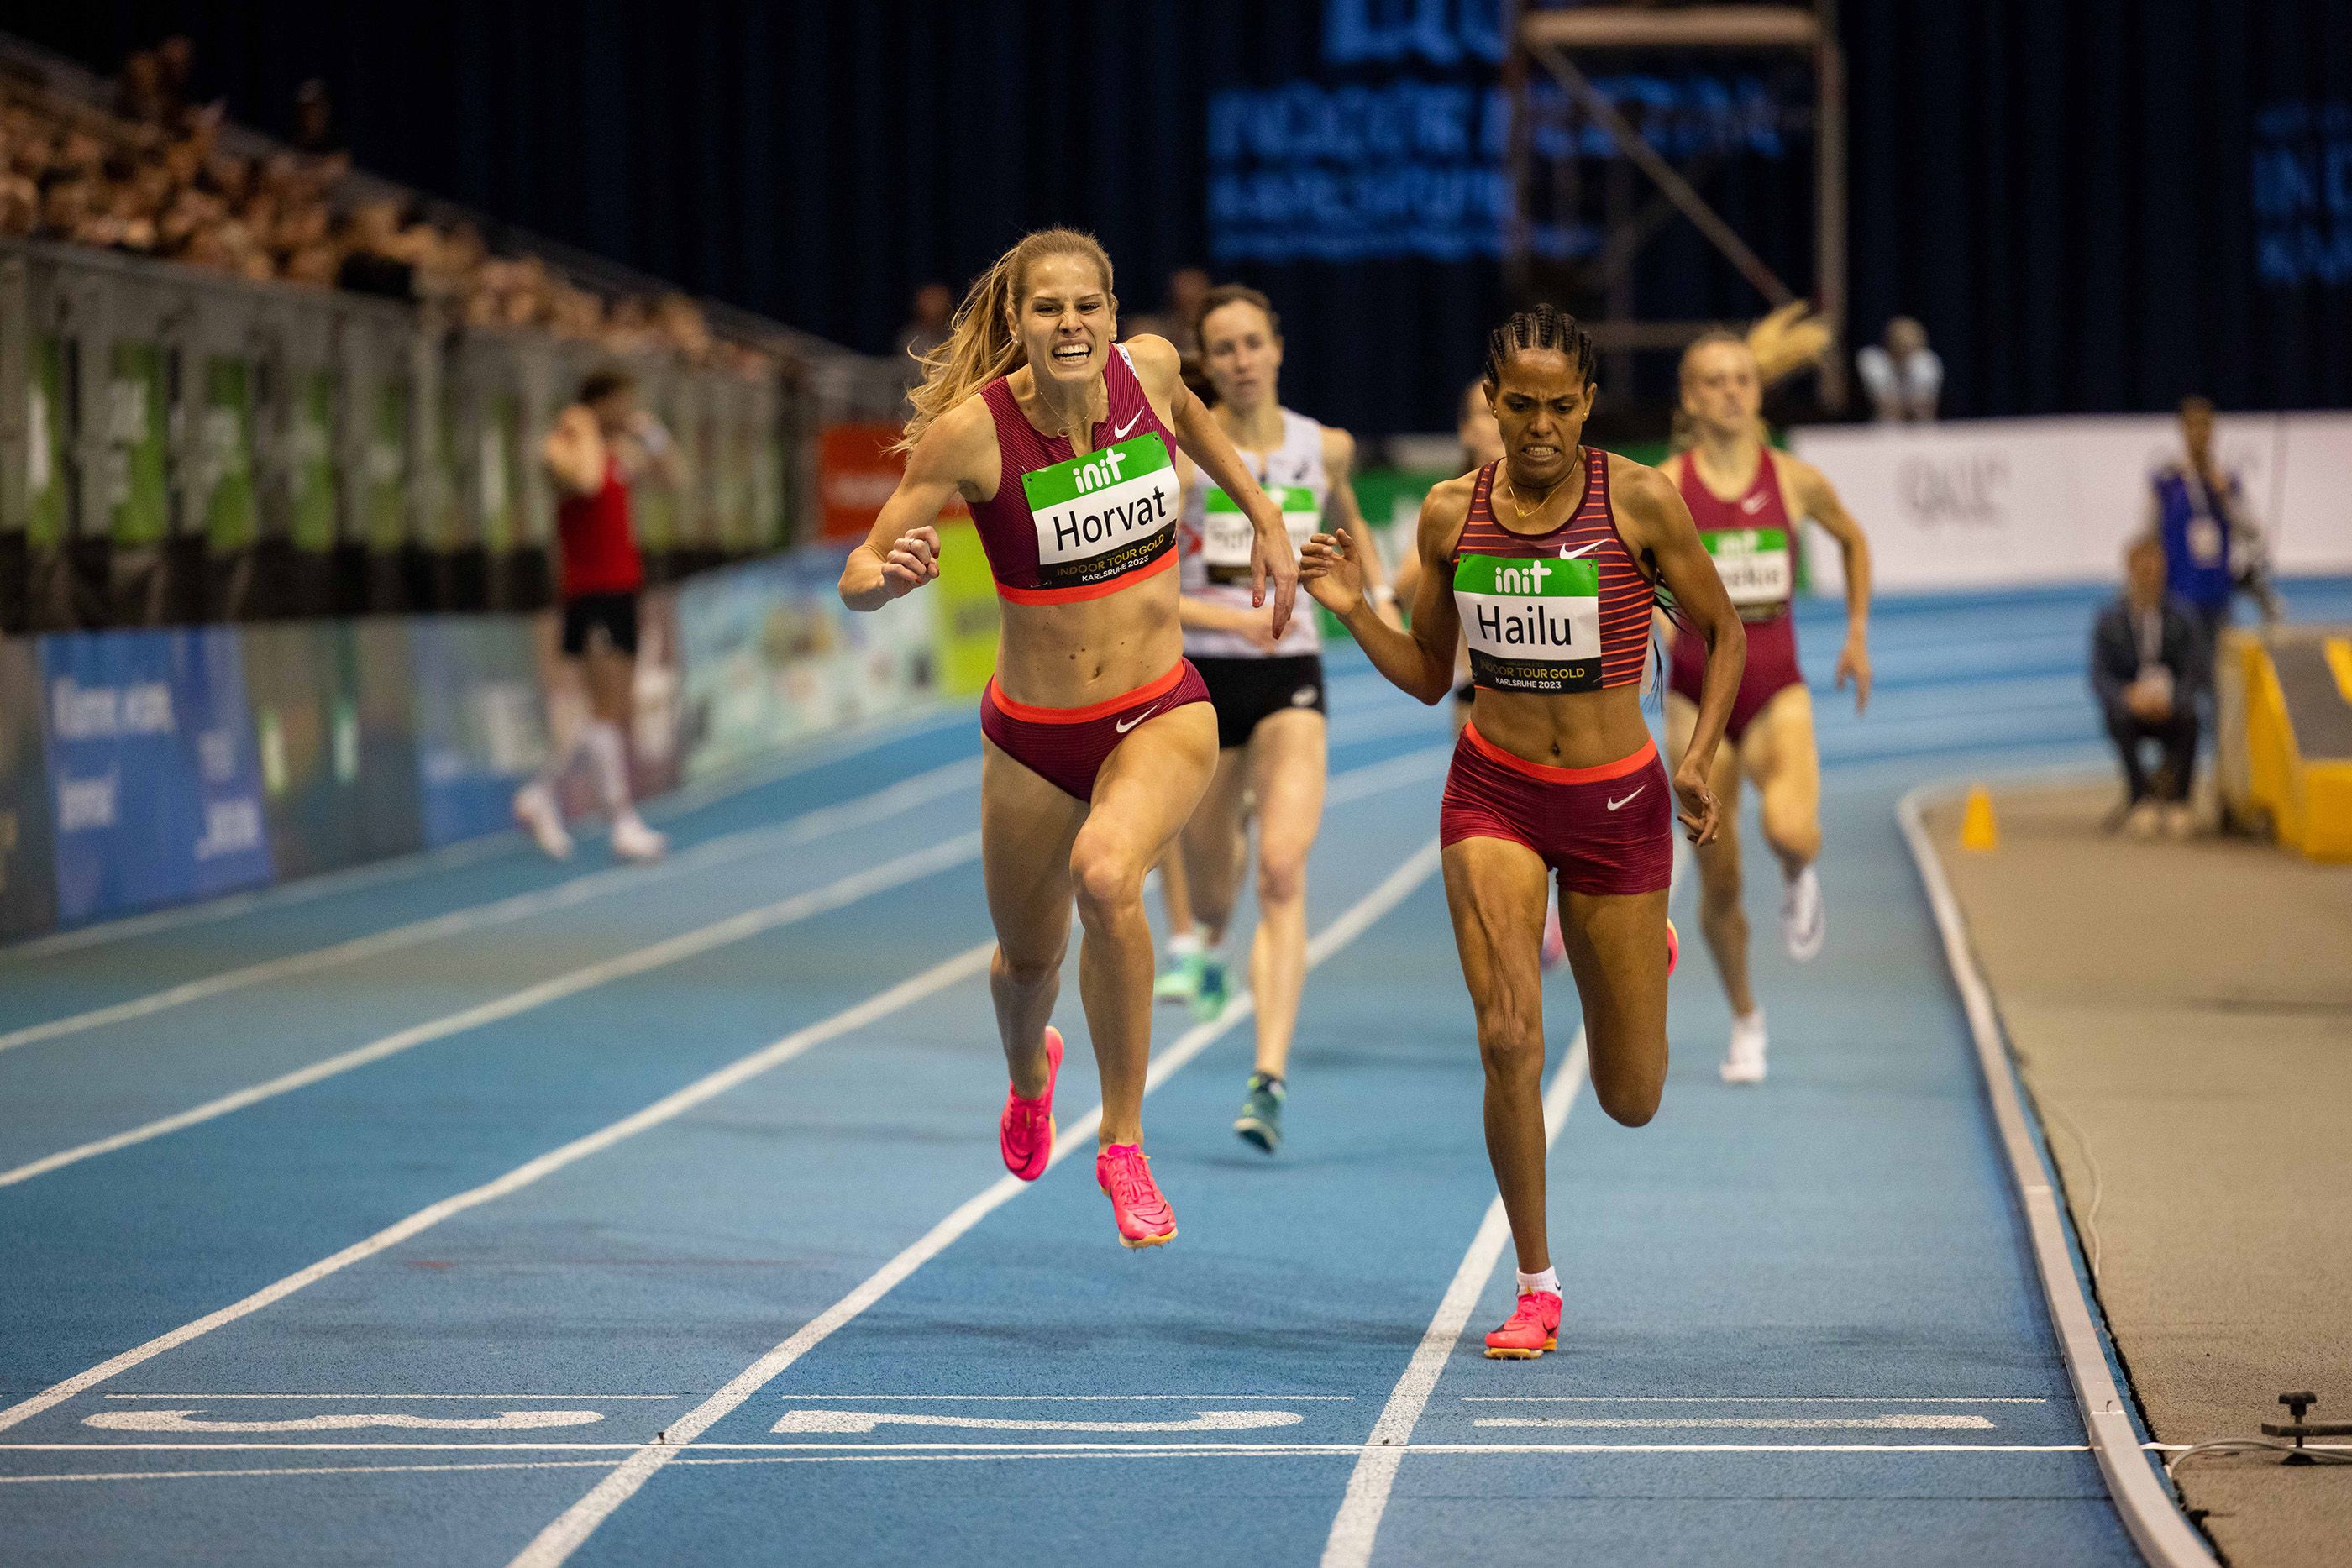 Eventual 800m winner Anita Horvat and Freweyni Hailu battle for the line in Karlsruhe